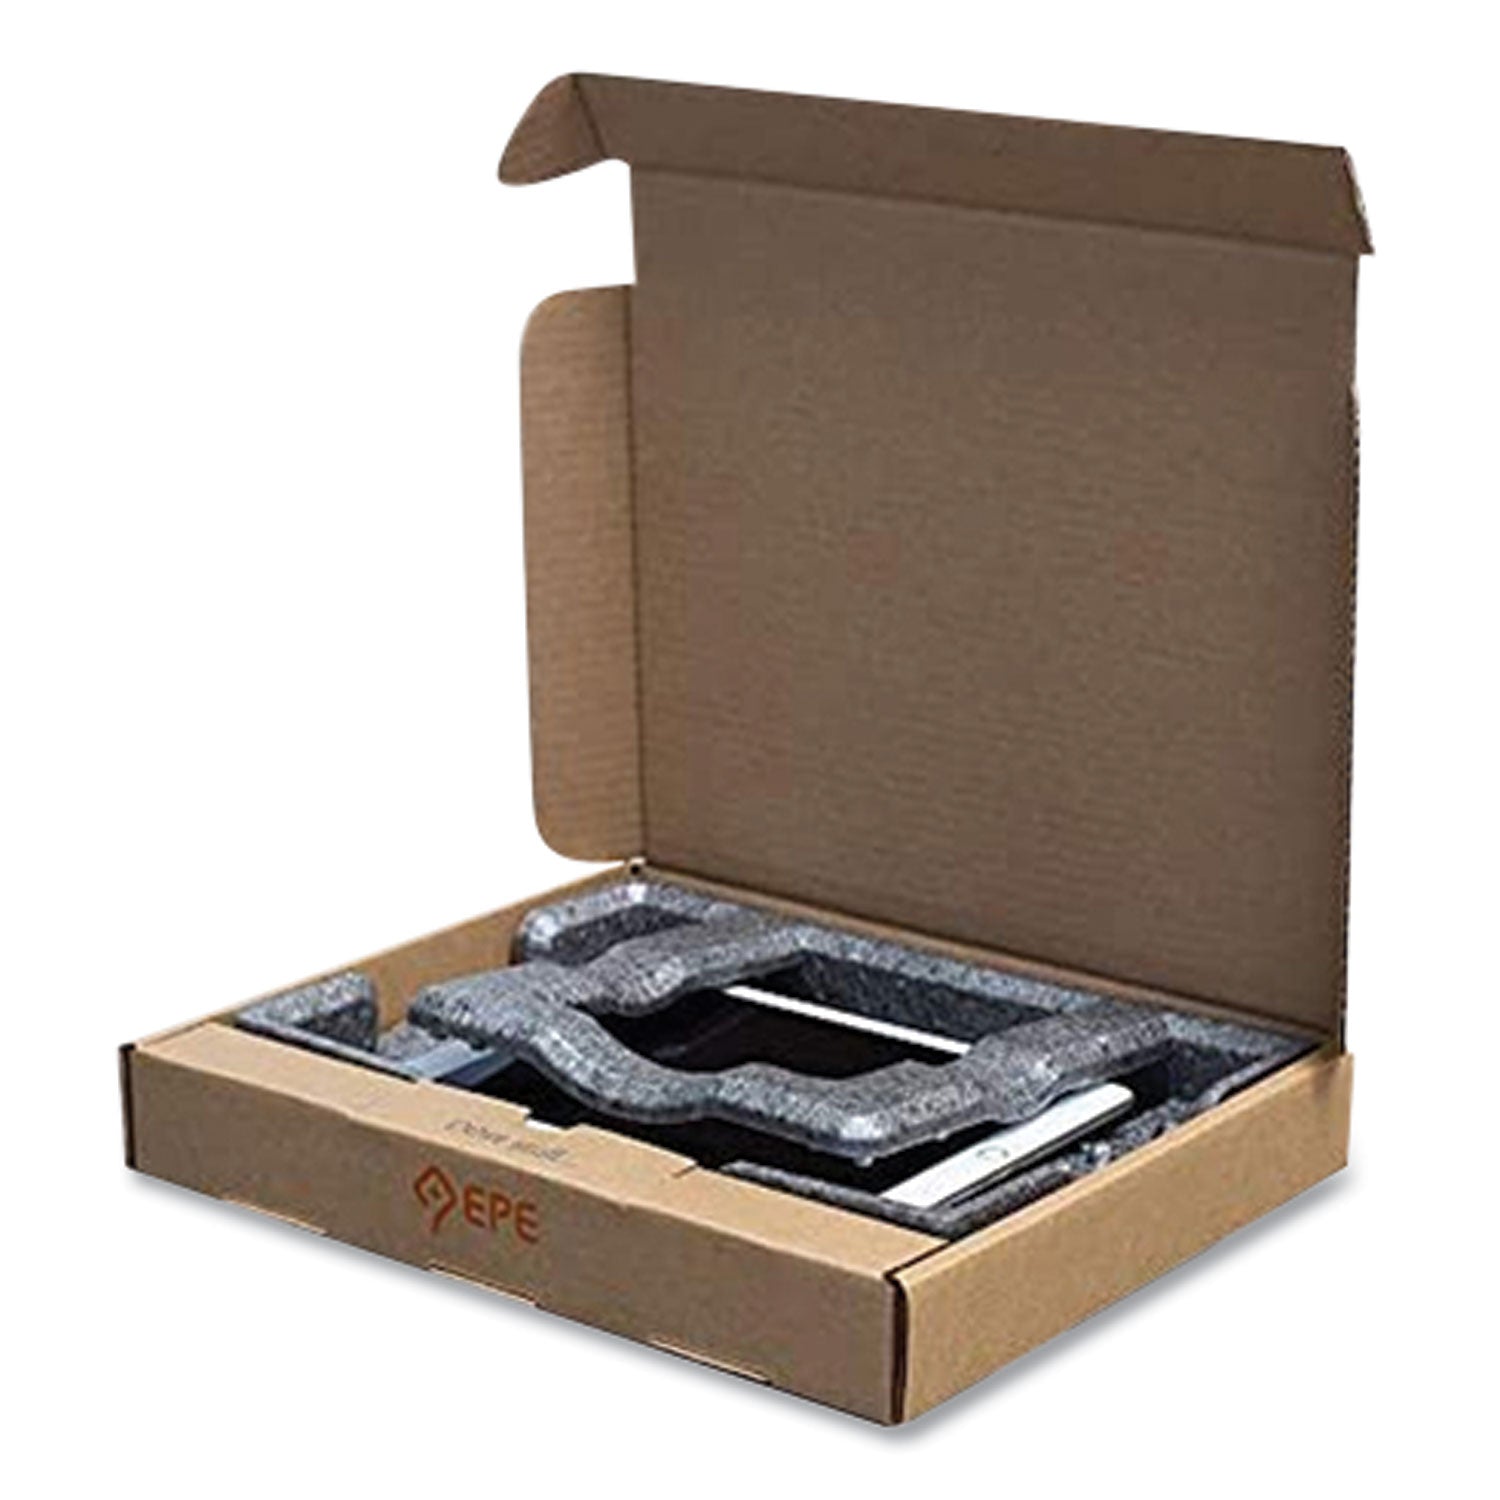 tablet-shipping-box-one-piece-foldover-opf-medium-1175-x-1425-x-2-brown-kraft_epultcs00201 - 3